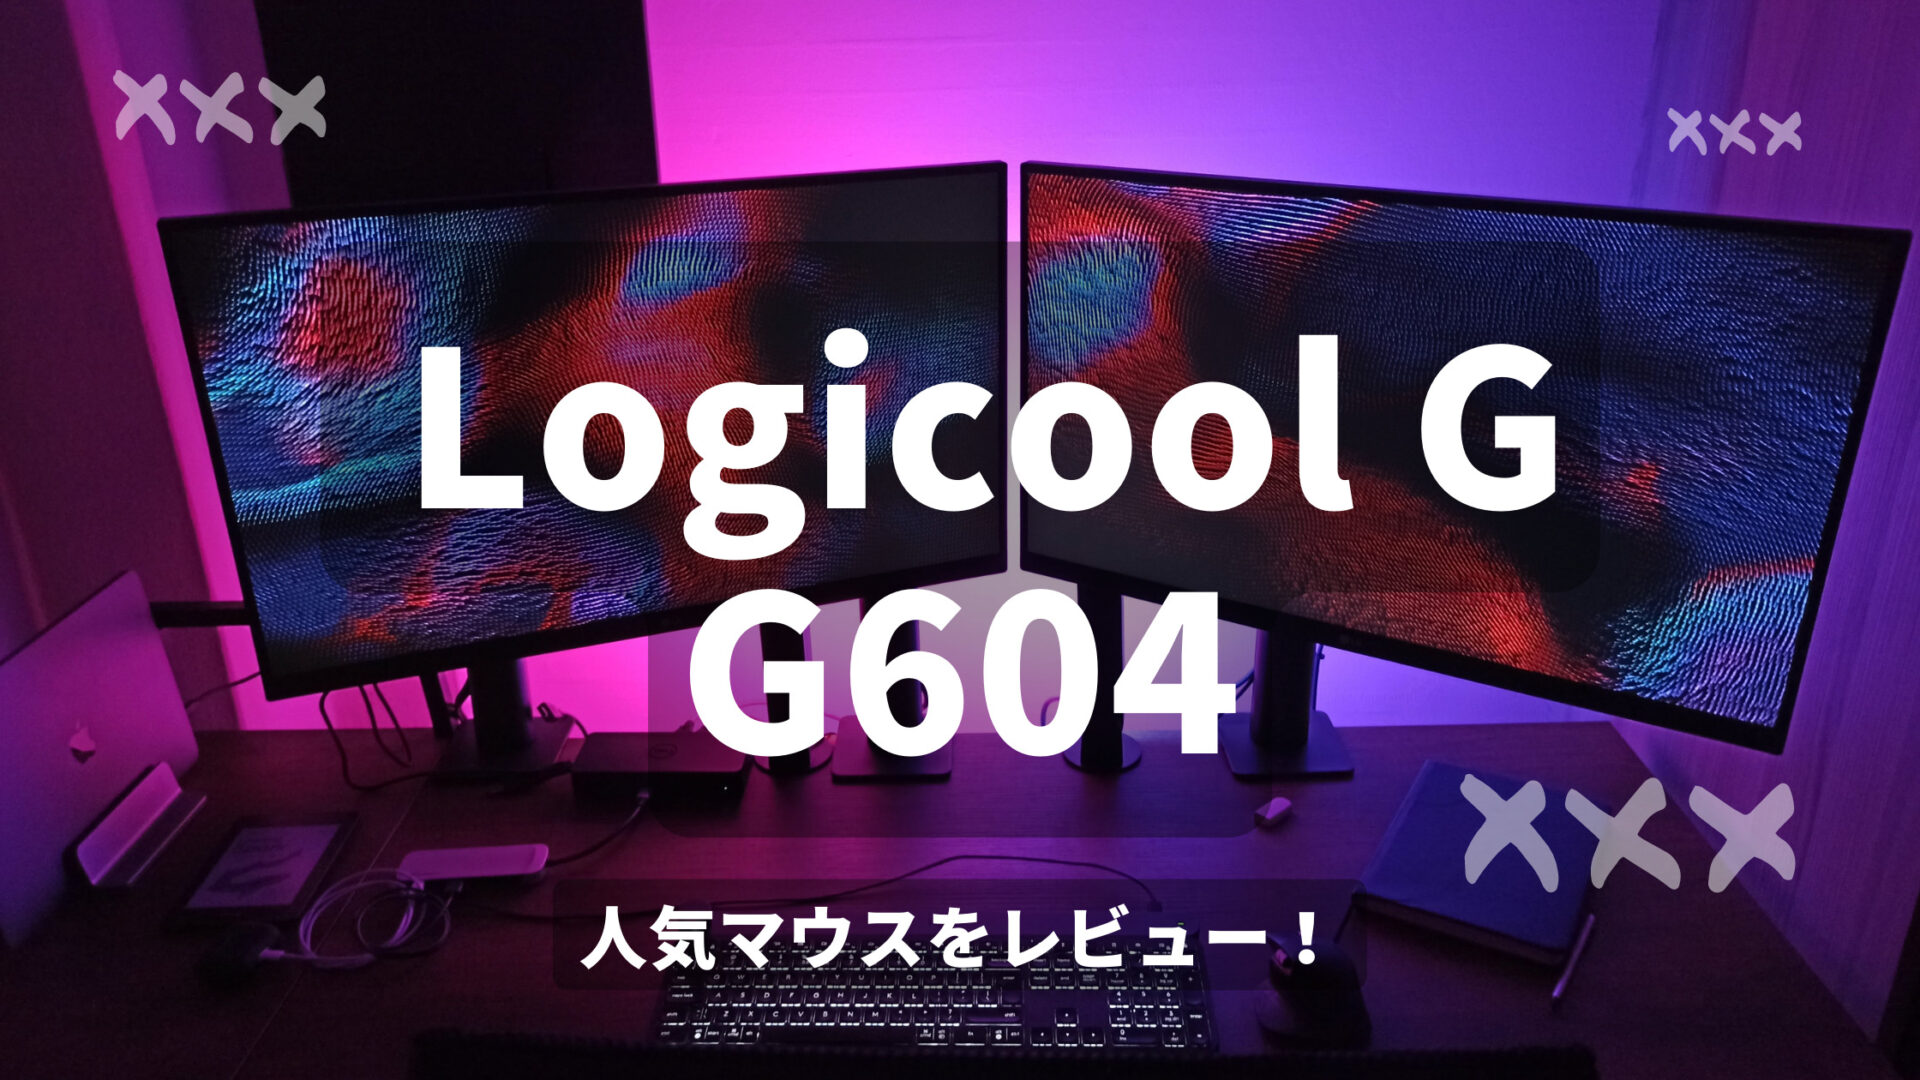 Logicool G G604をレビュー ゲームはもちろん事務作業をこなせる 万能ワイヤレスゲーミングマウスを紹介